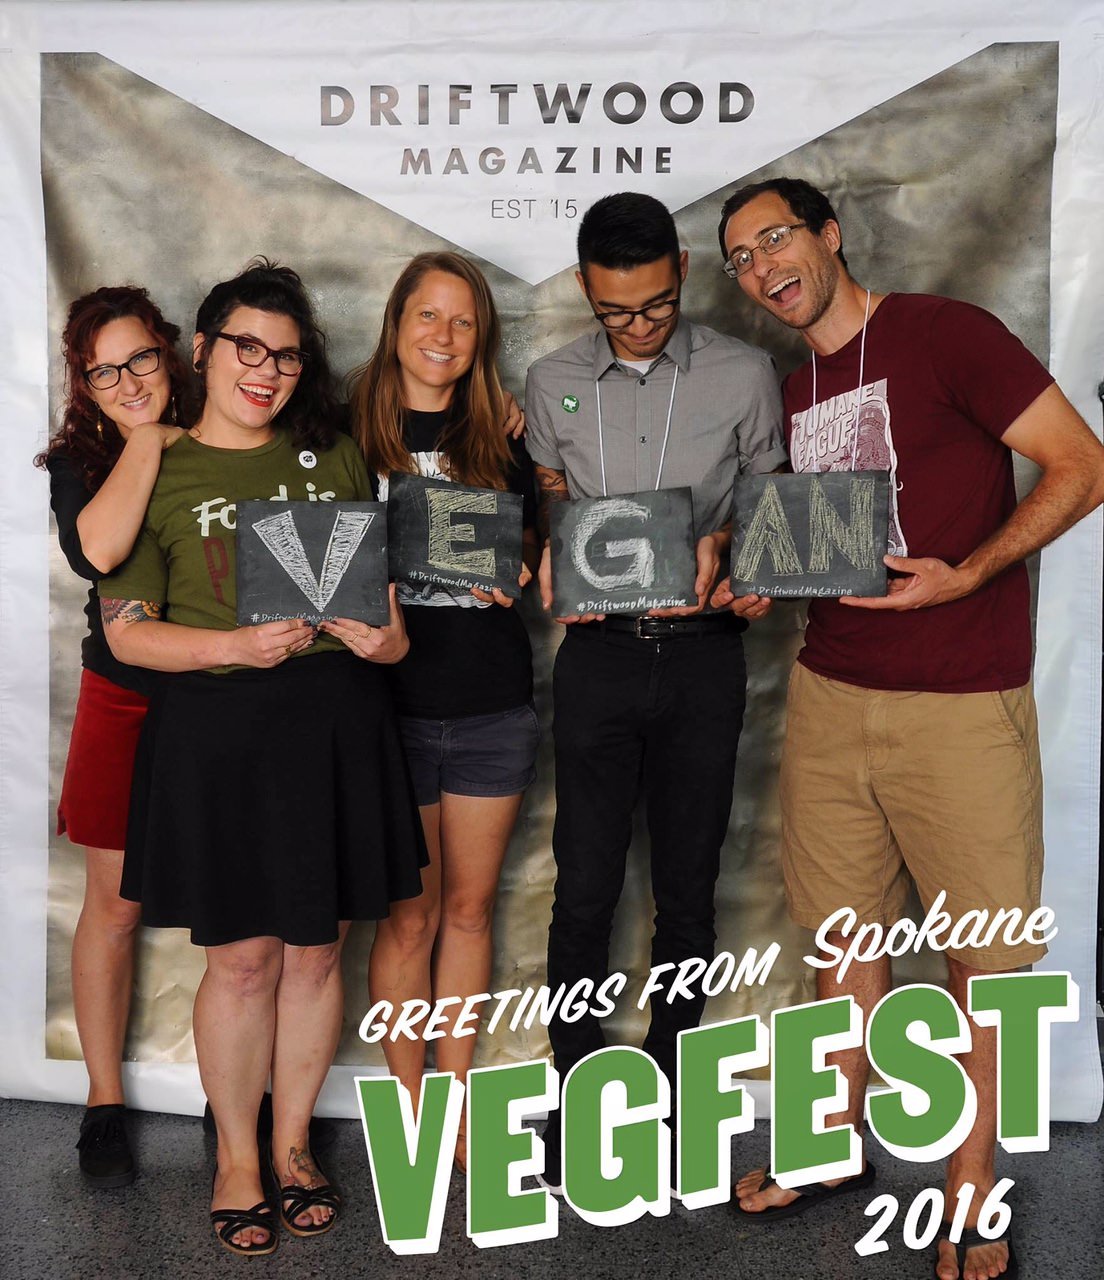 Driftwood-Magazine-Spokane-Vegfest-photobooth-graphic-overlay.jpg